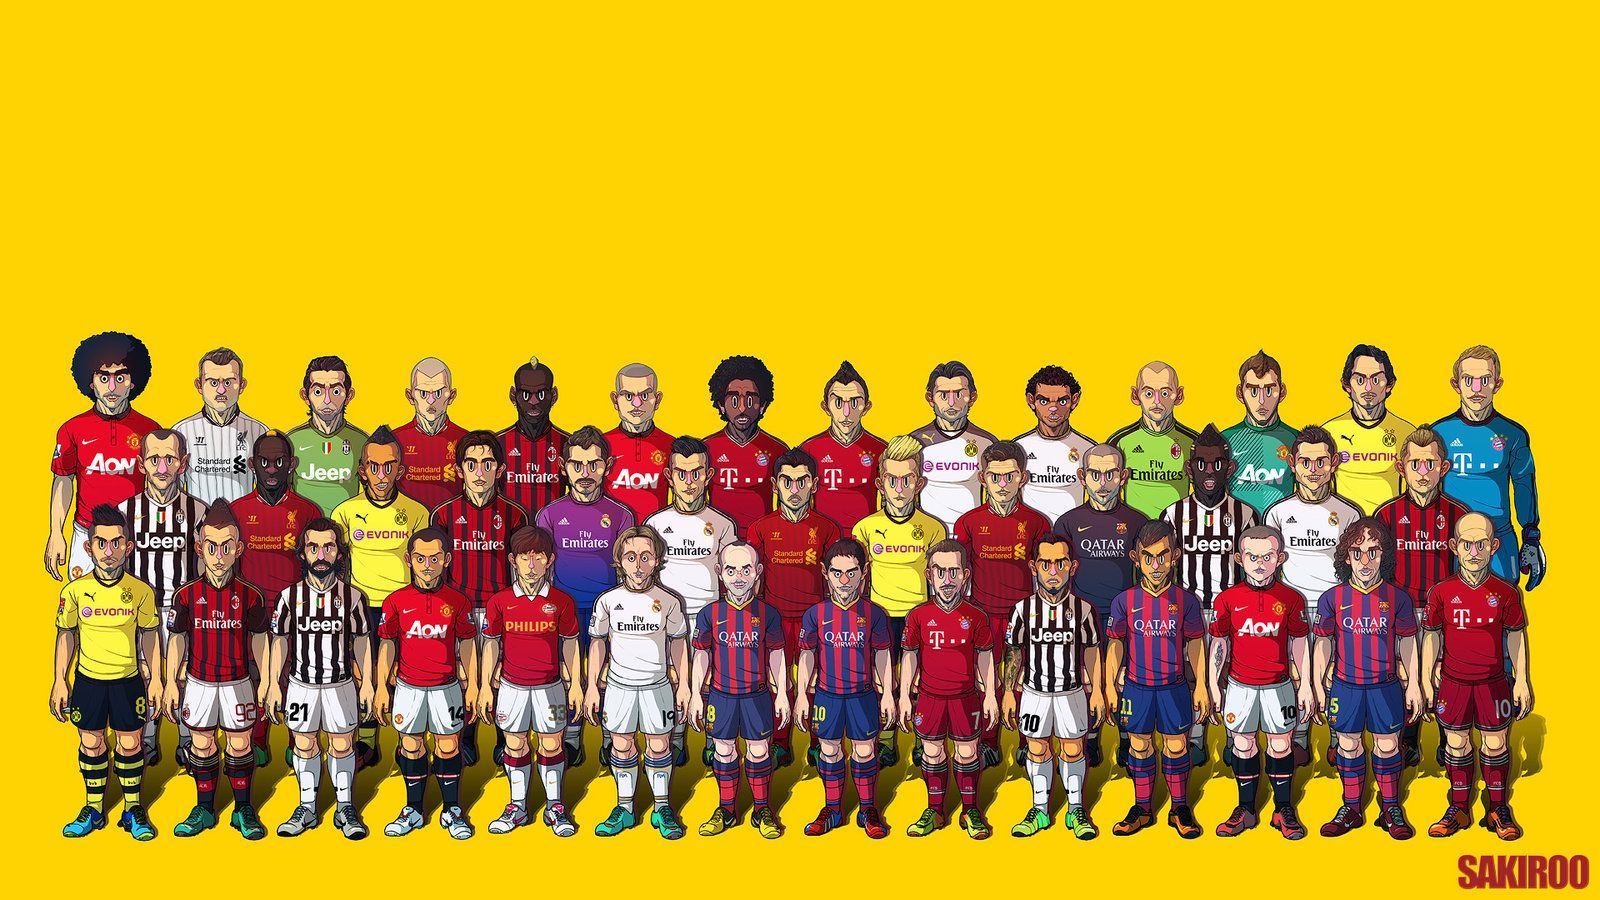 Cartoon Football Wallpapers